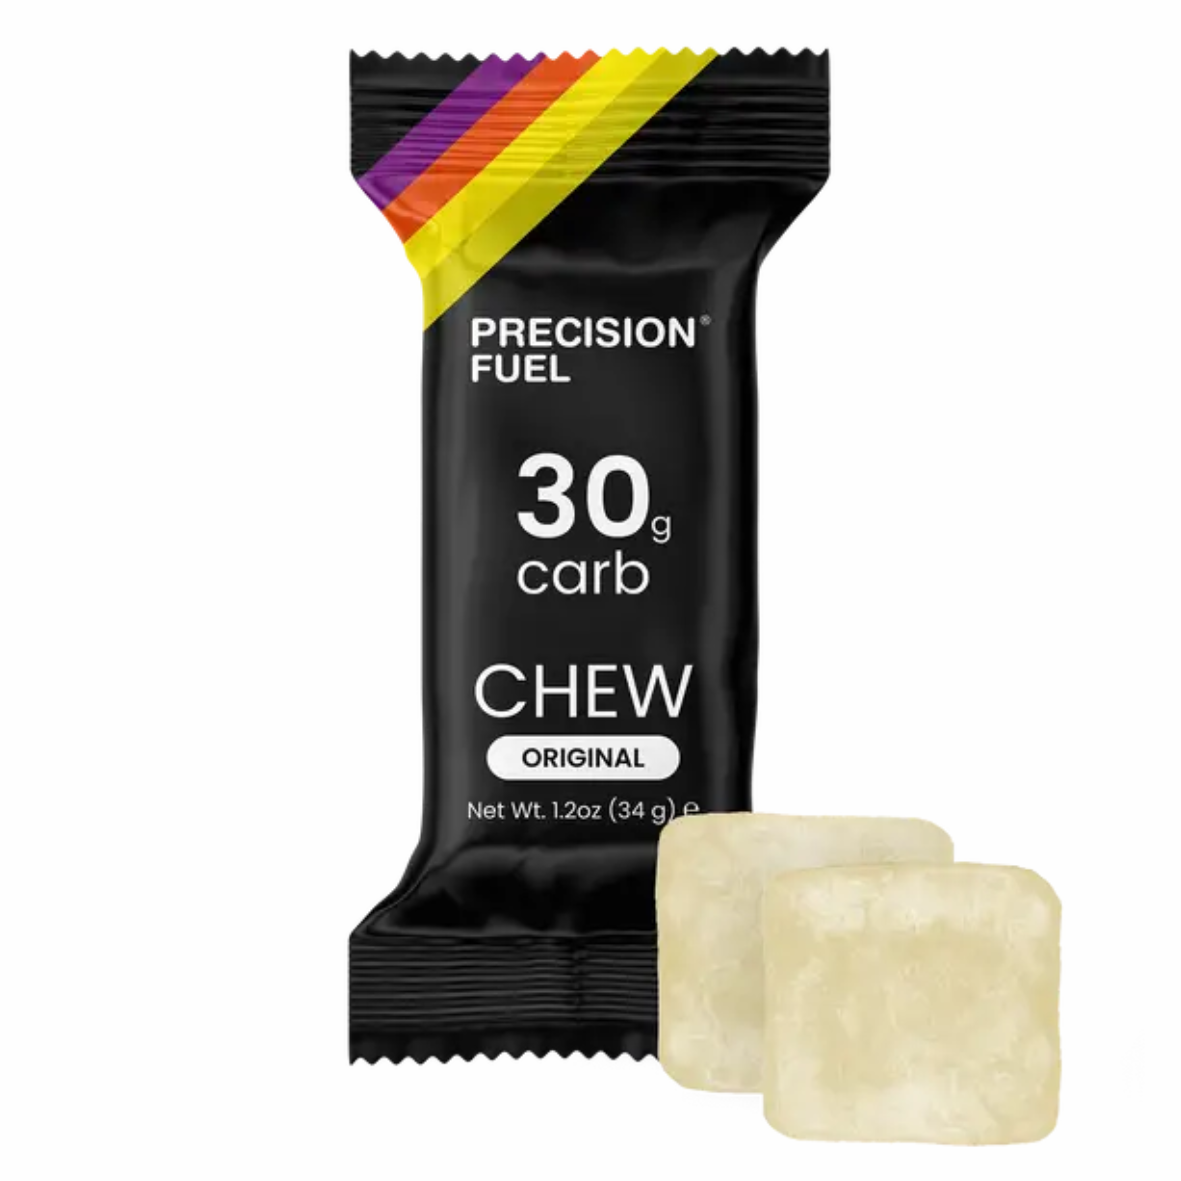 Precision fuel & hydration 30g carb energy chew original flavour